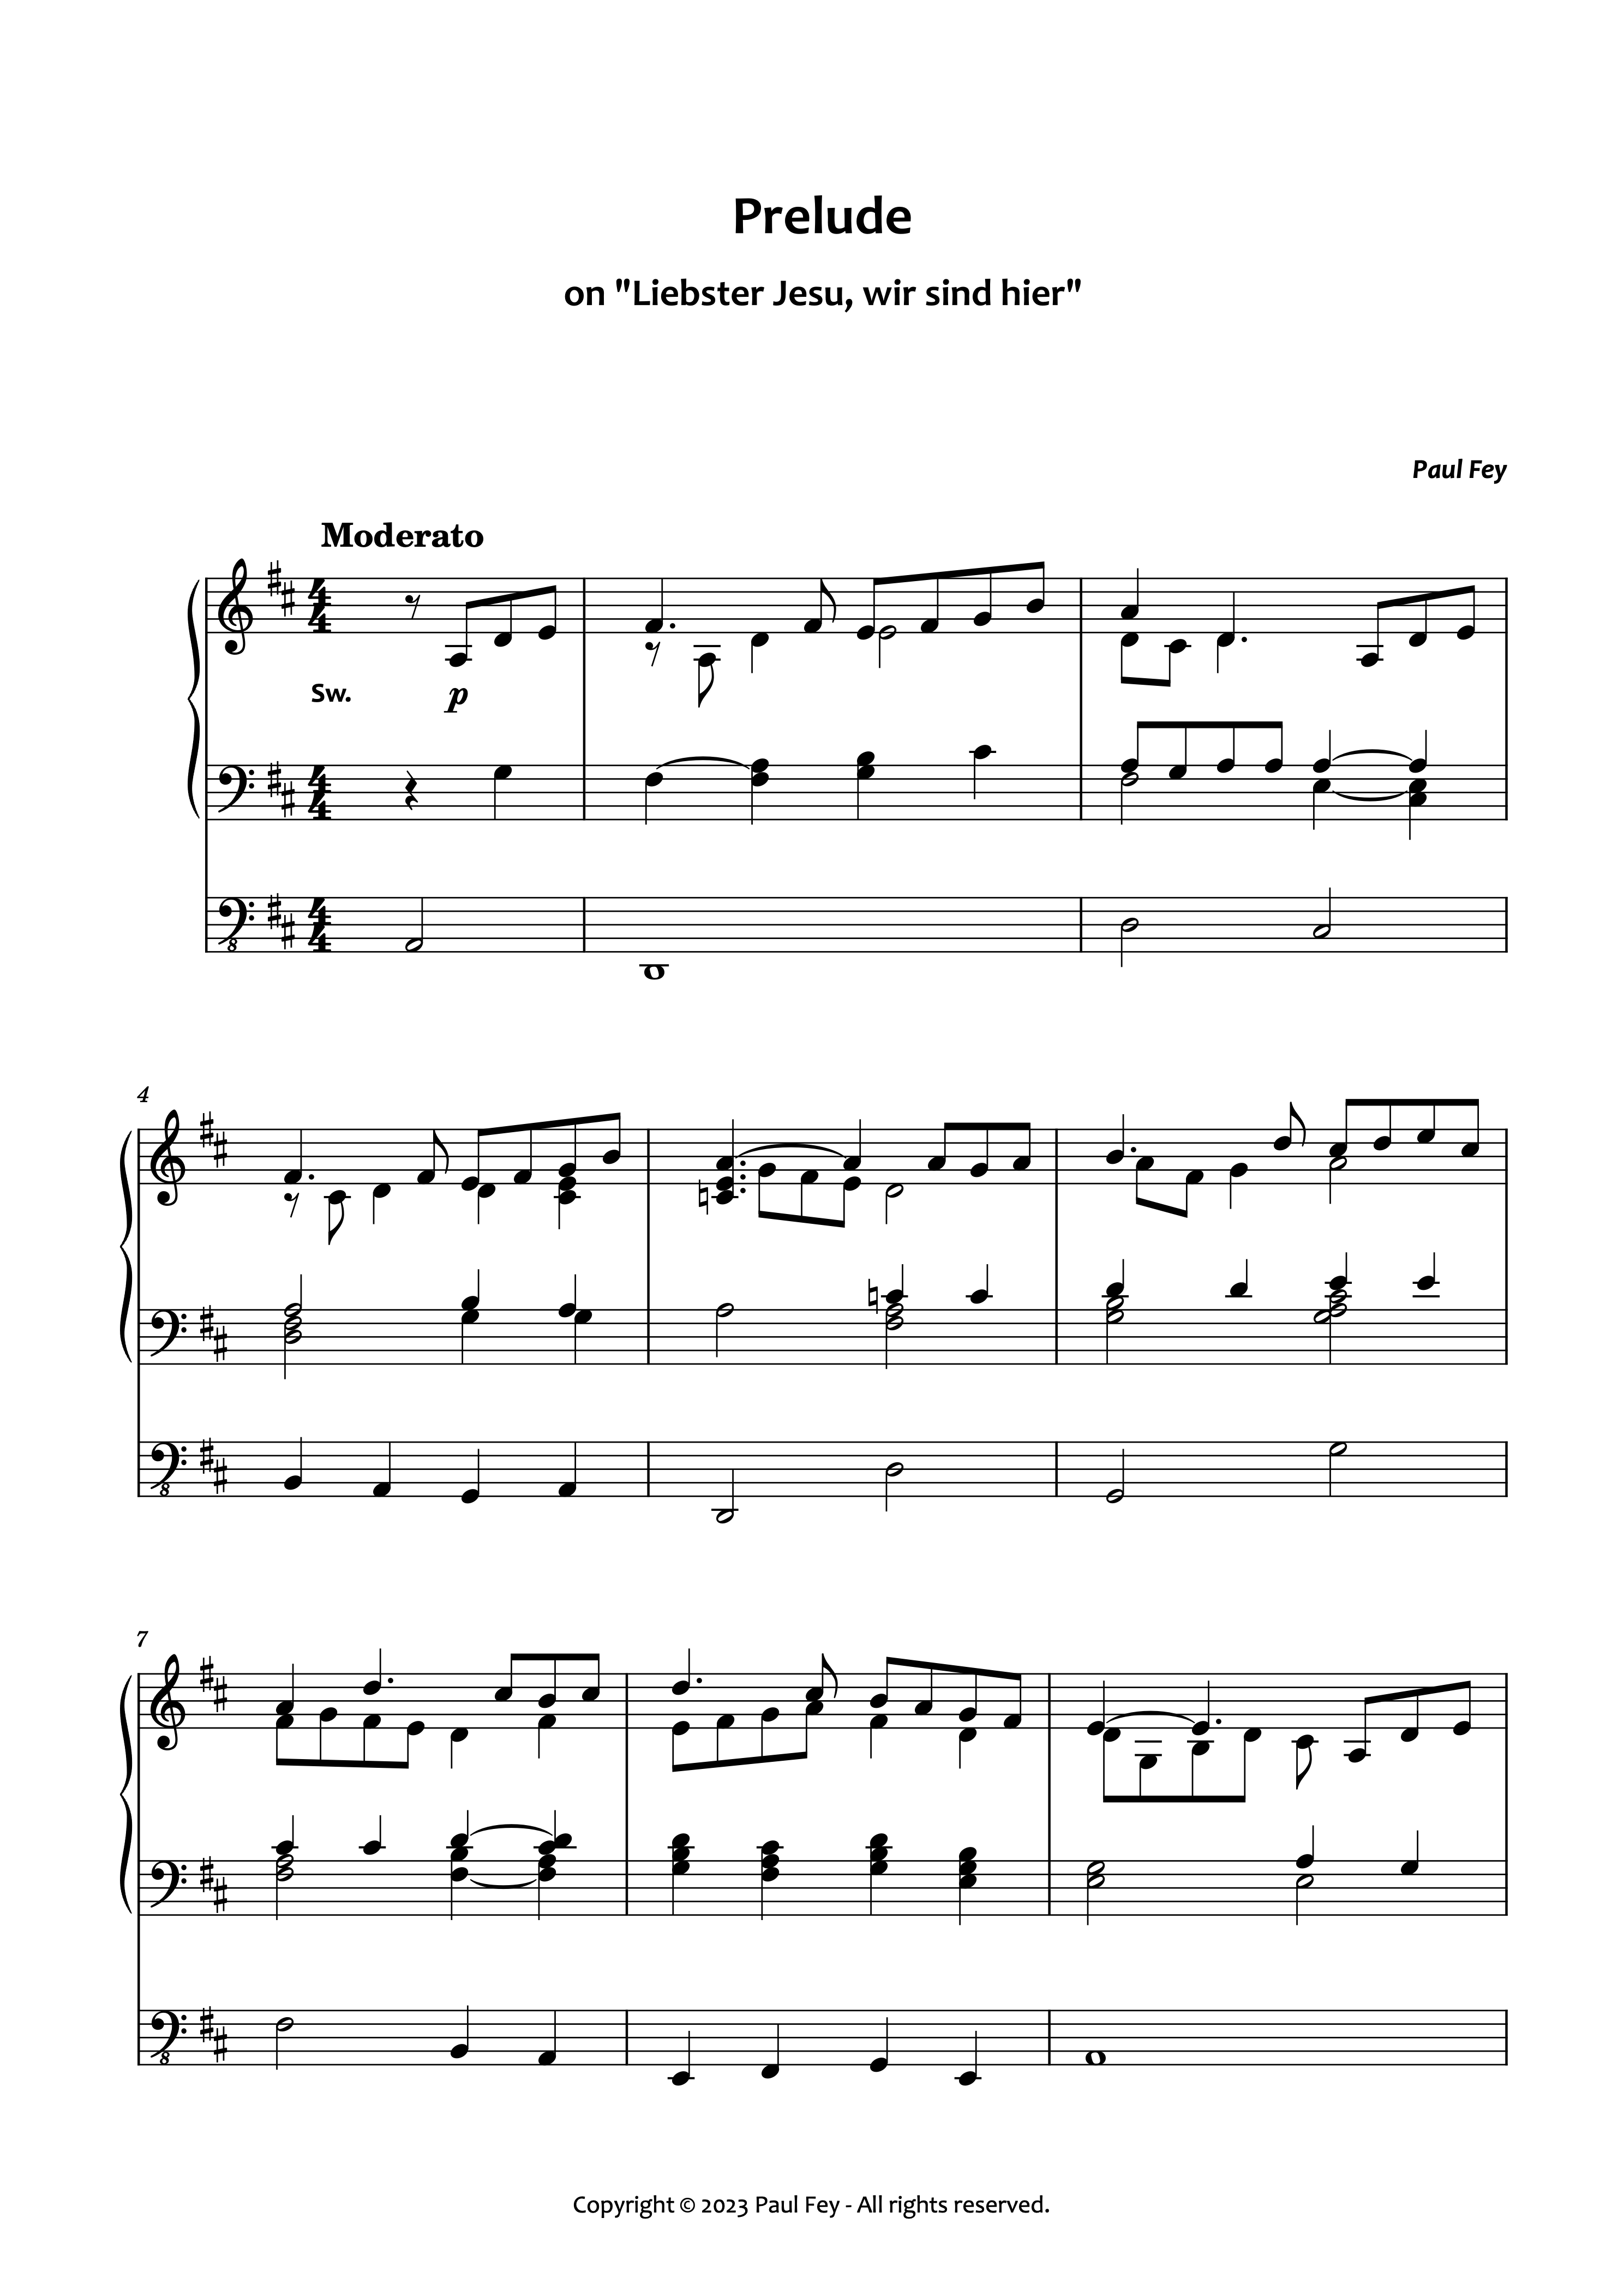 Prelude on "Liebster Jesu" (Sheet Music) - Music for Organ Paul Fey Organist 